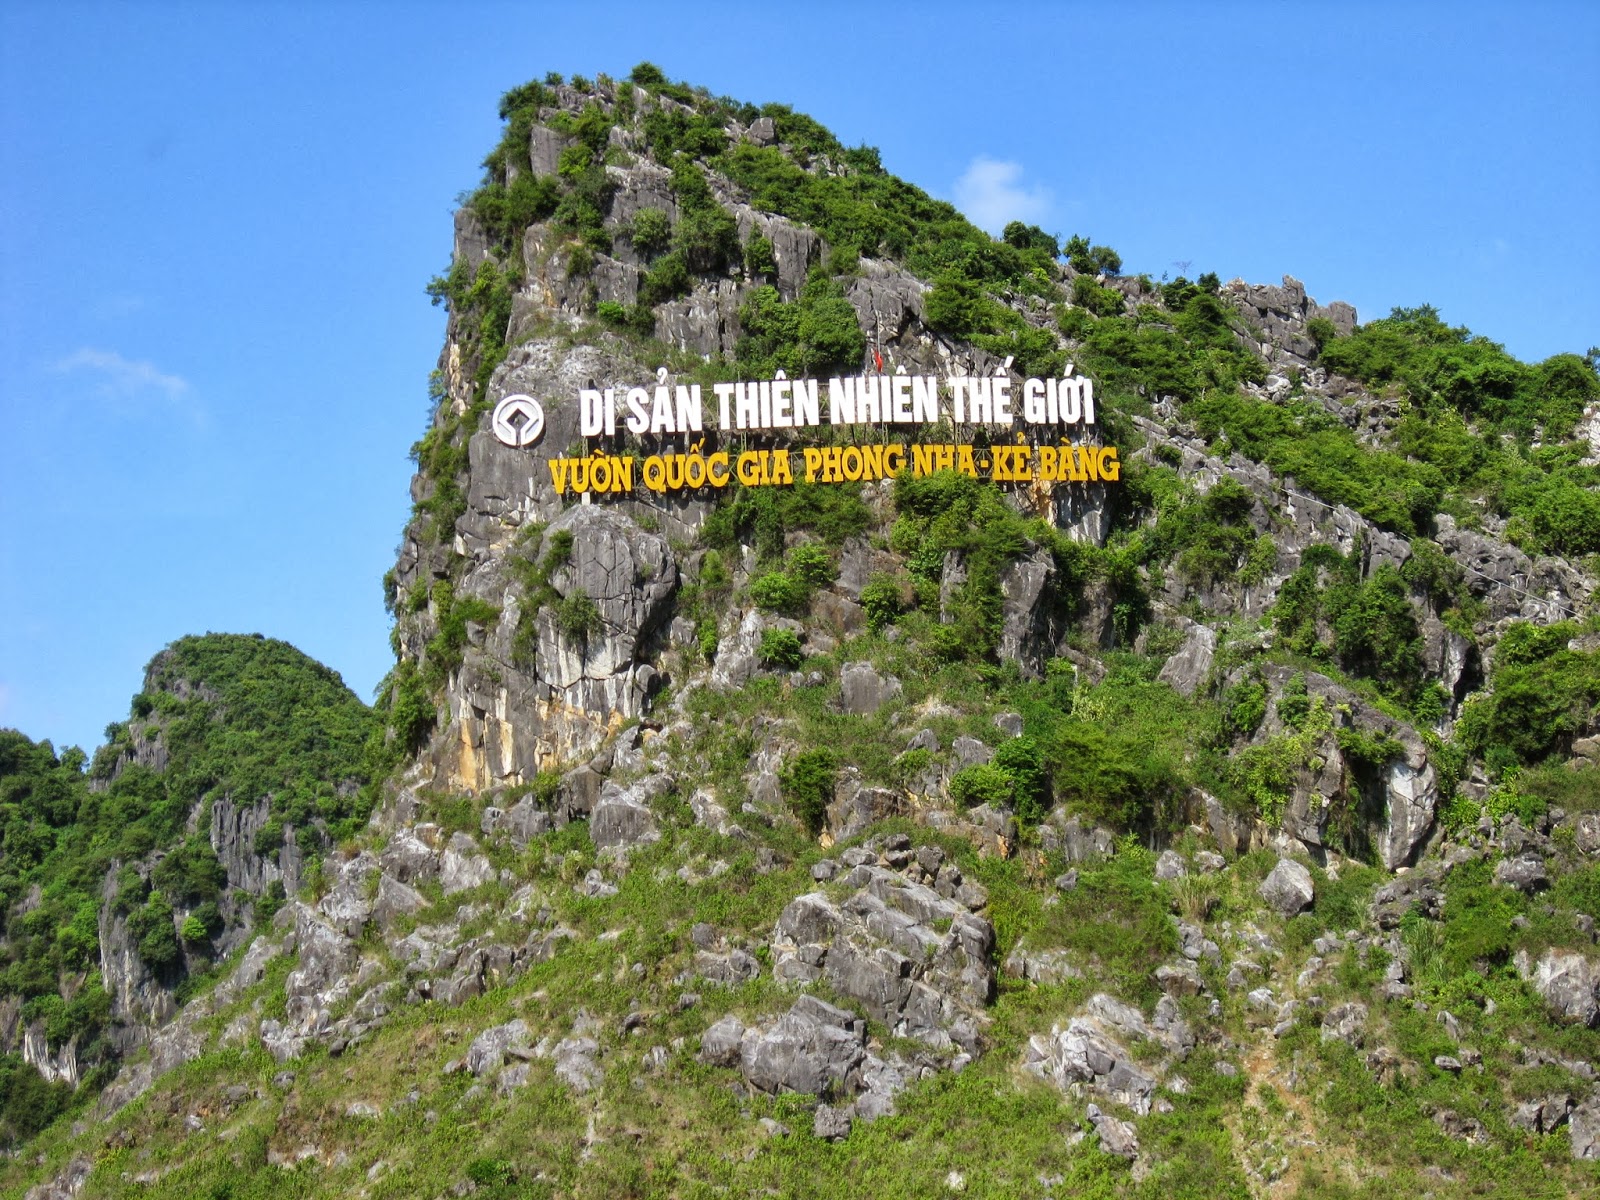 Afbeeldingen van phong nha ke bang national park